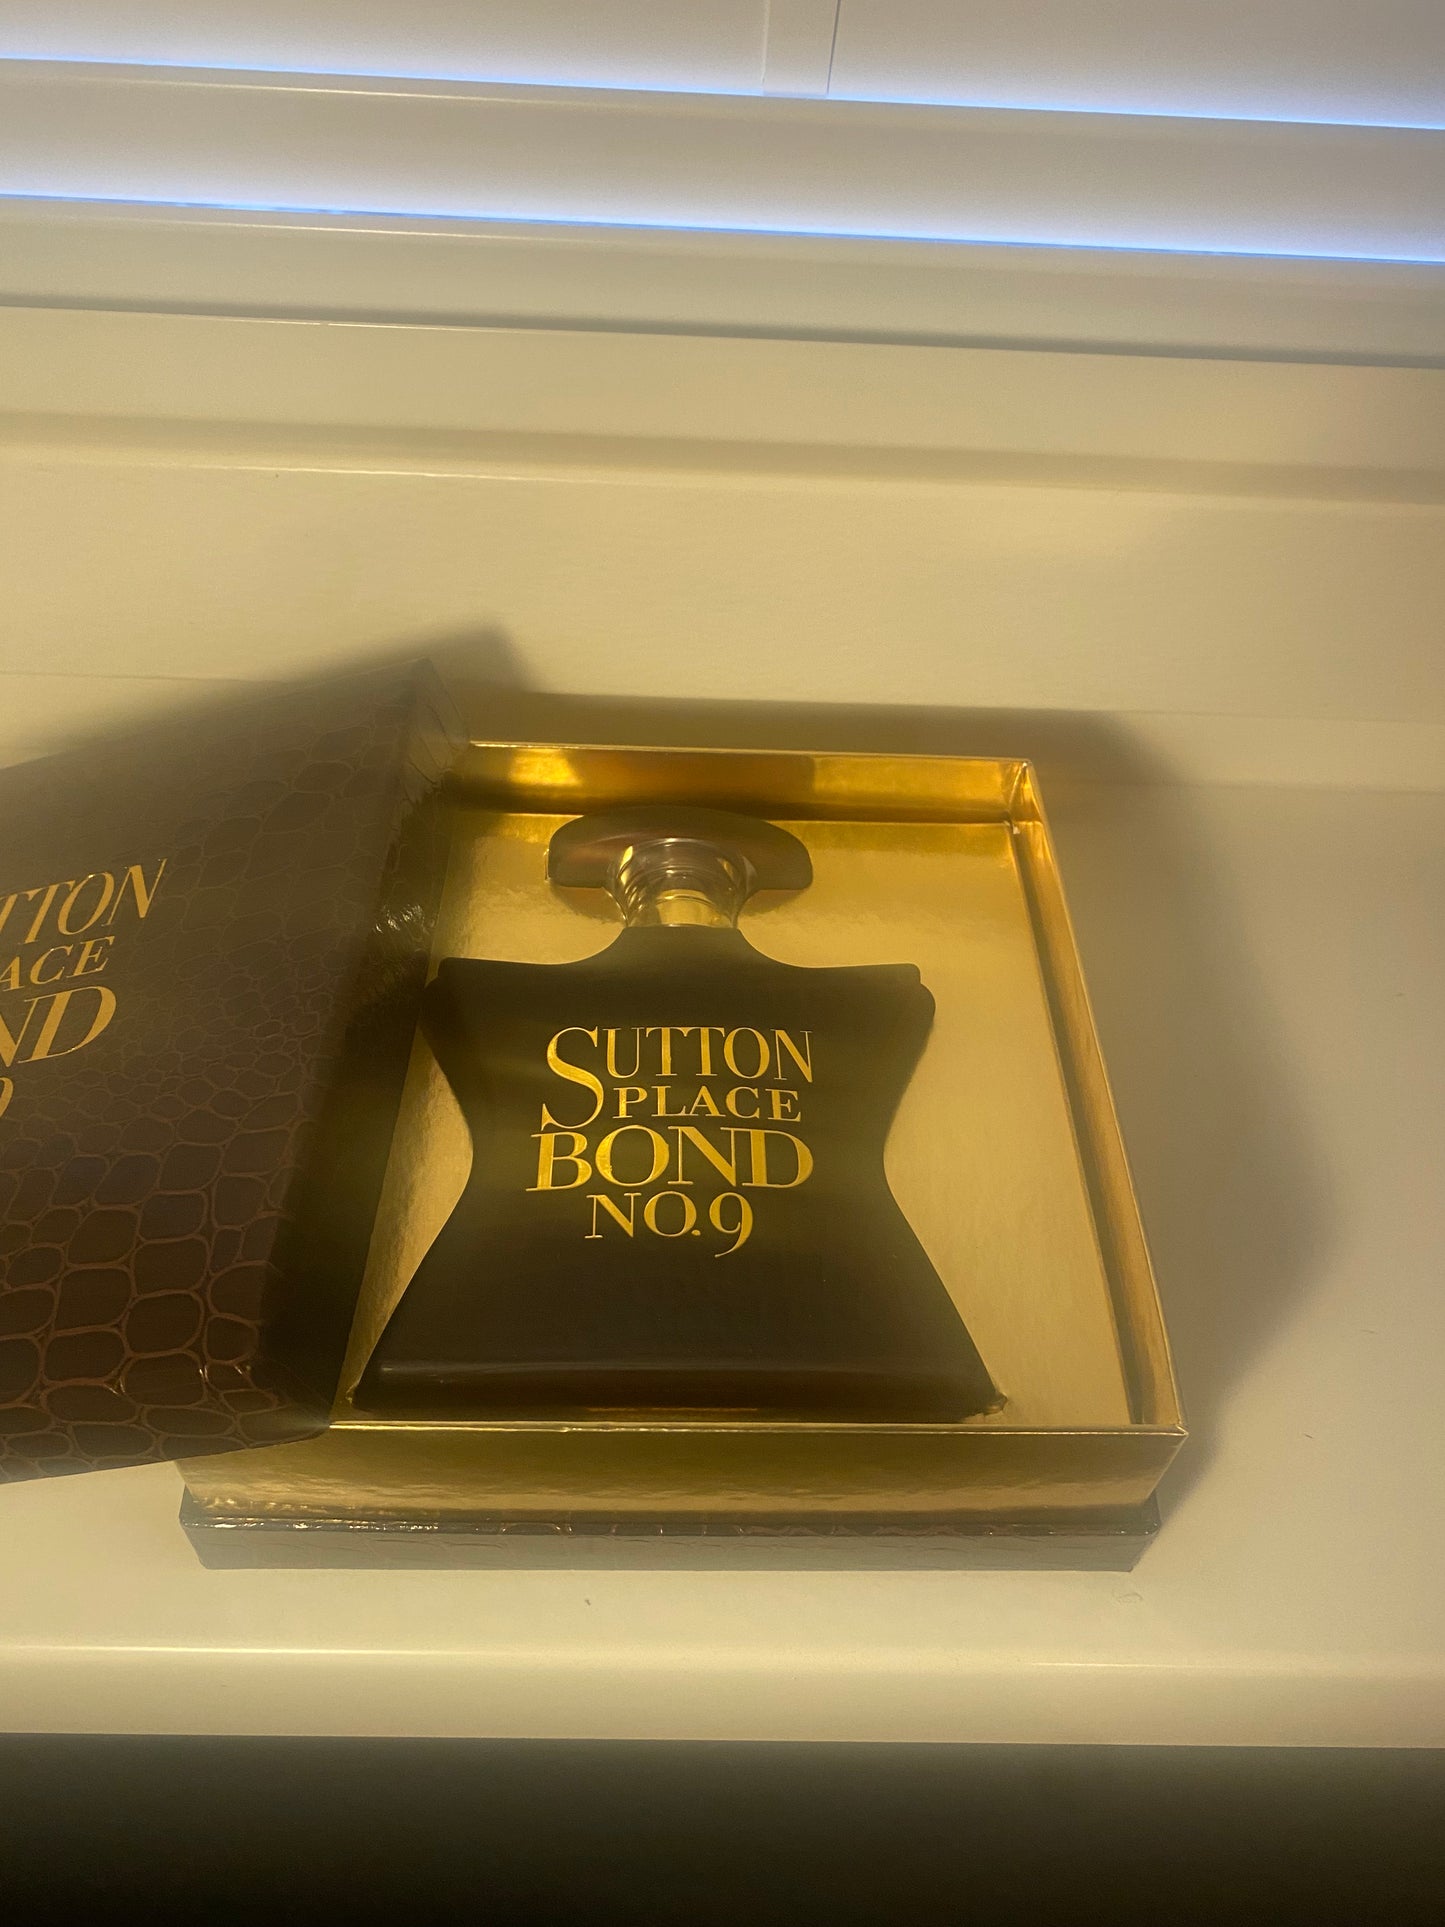 Sutton place - Bond no9 - Niche perfume